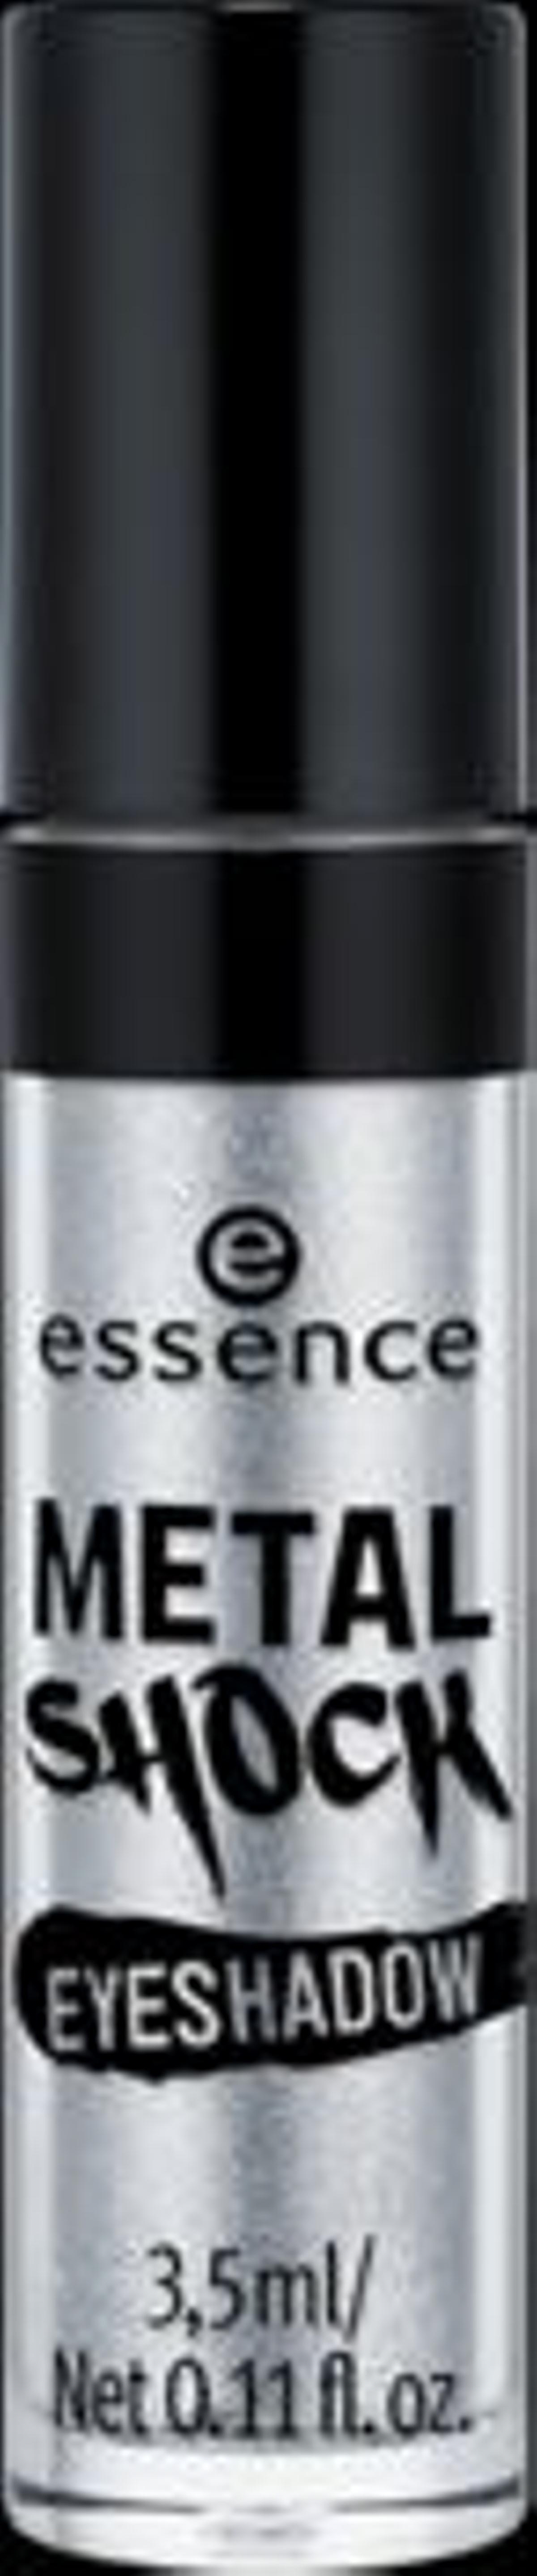 Metal Shock Eyeshadow, Essence